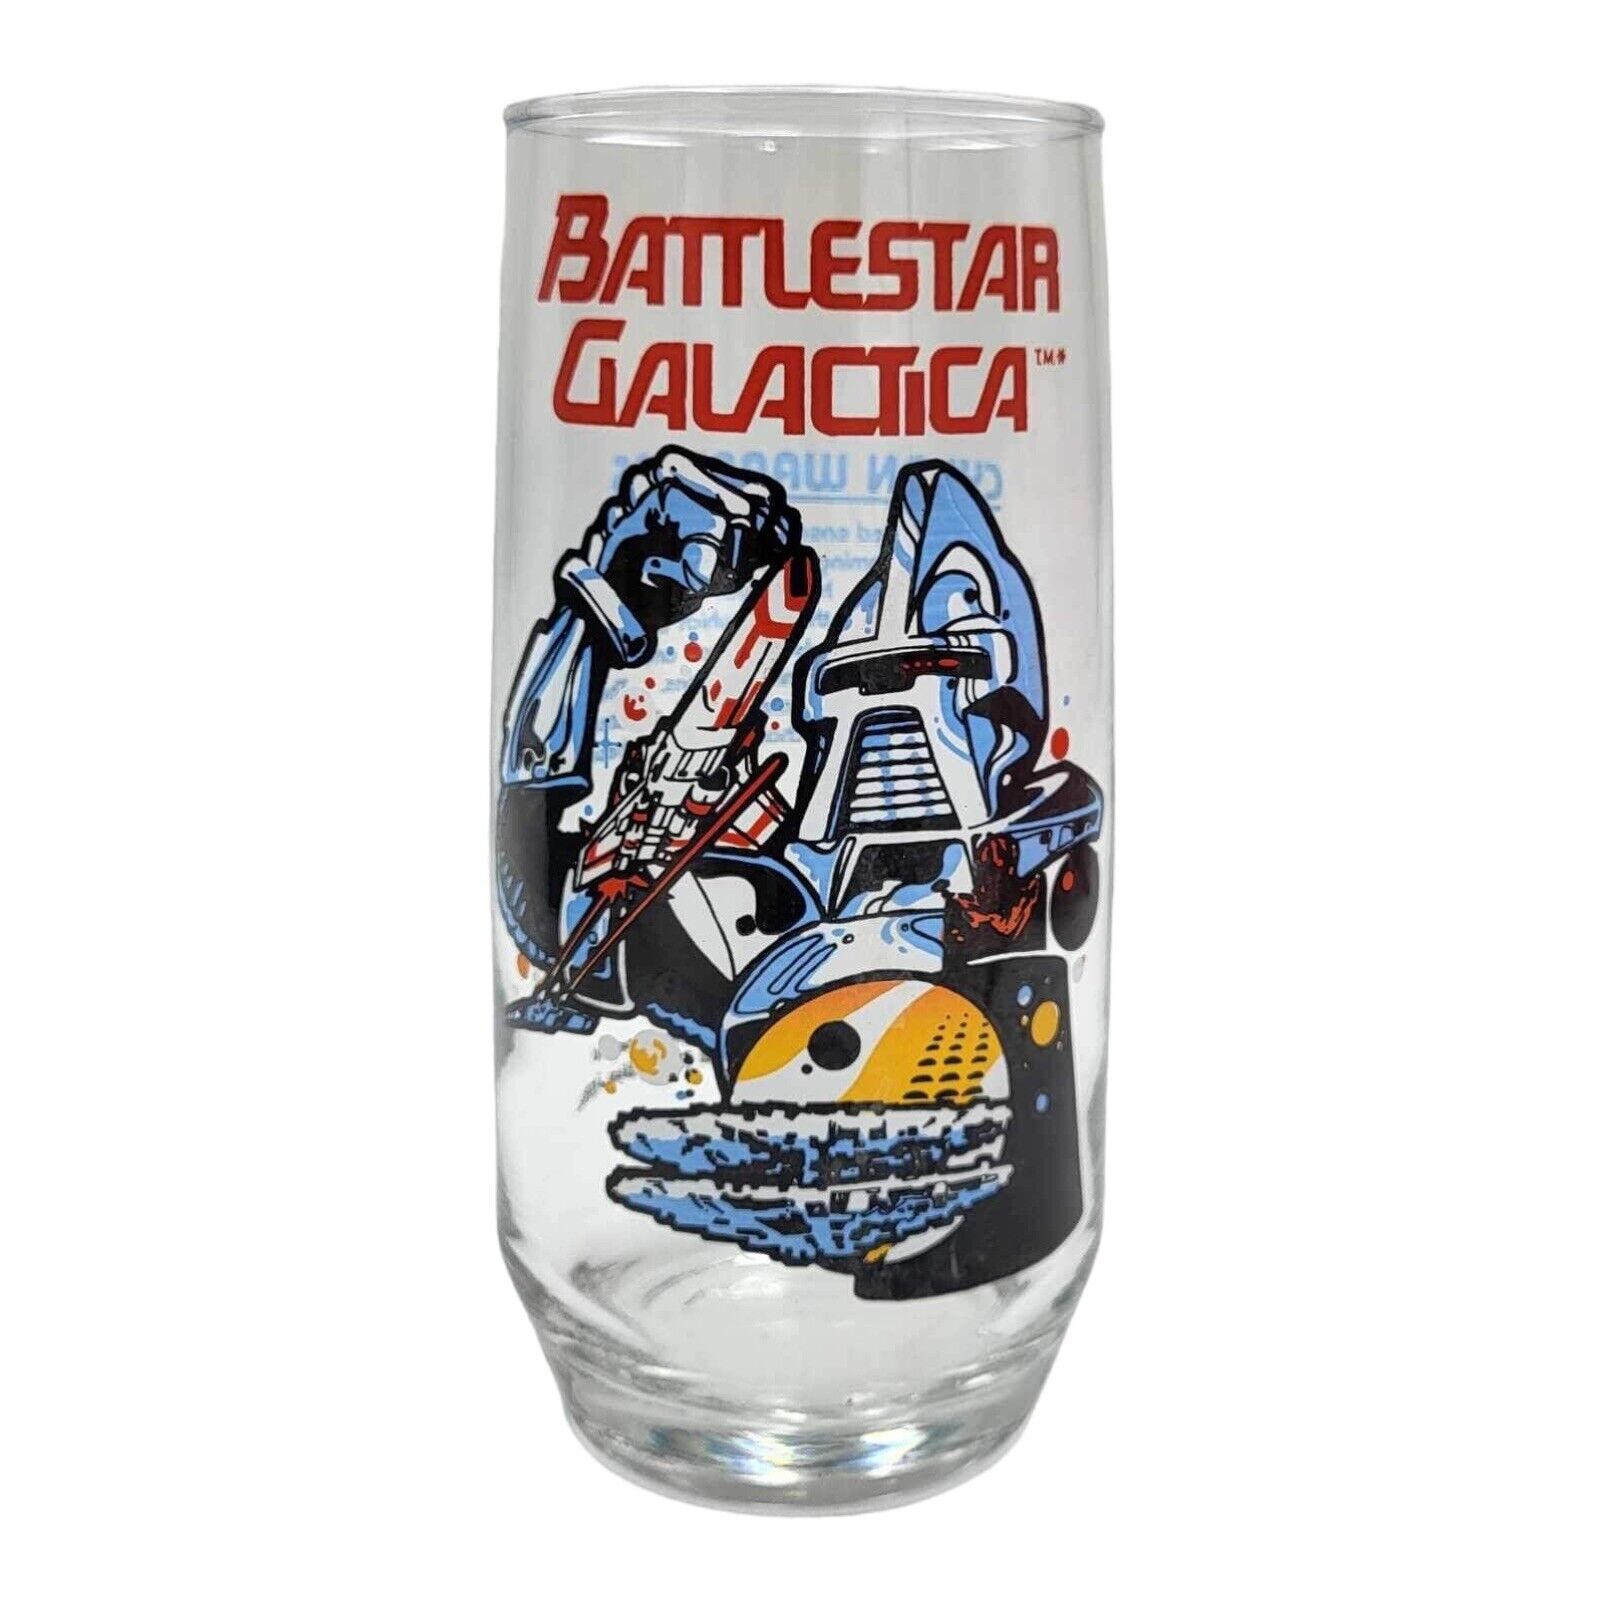 Battlestar Galactica Glass CYLON WARRIORS 1979 Universal City Studios Vintage